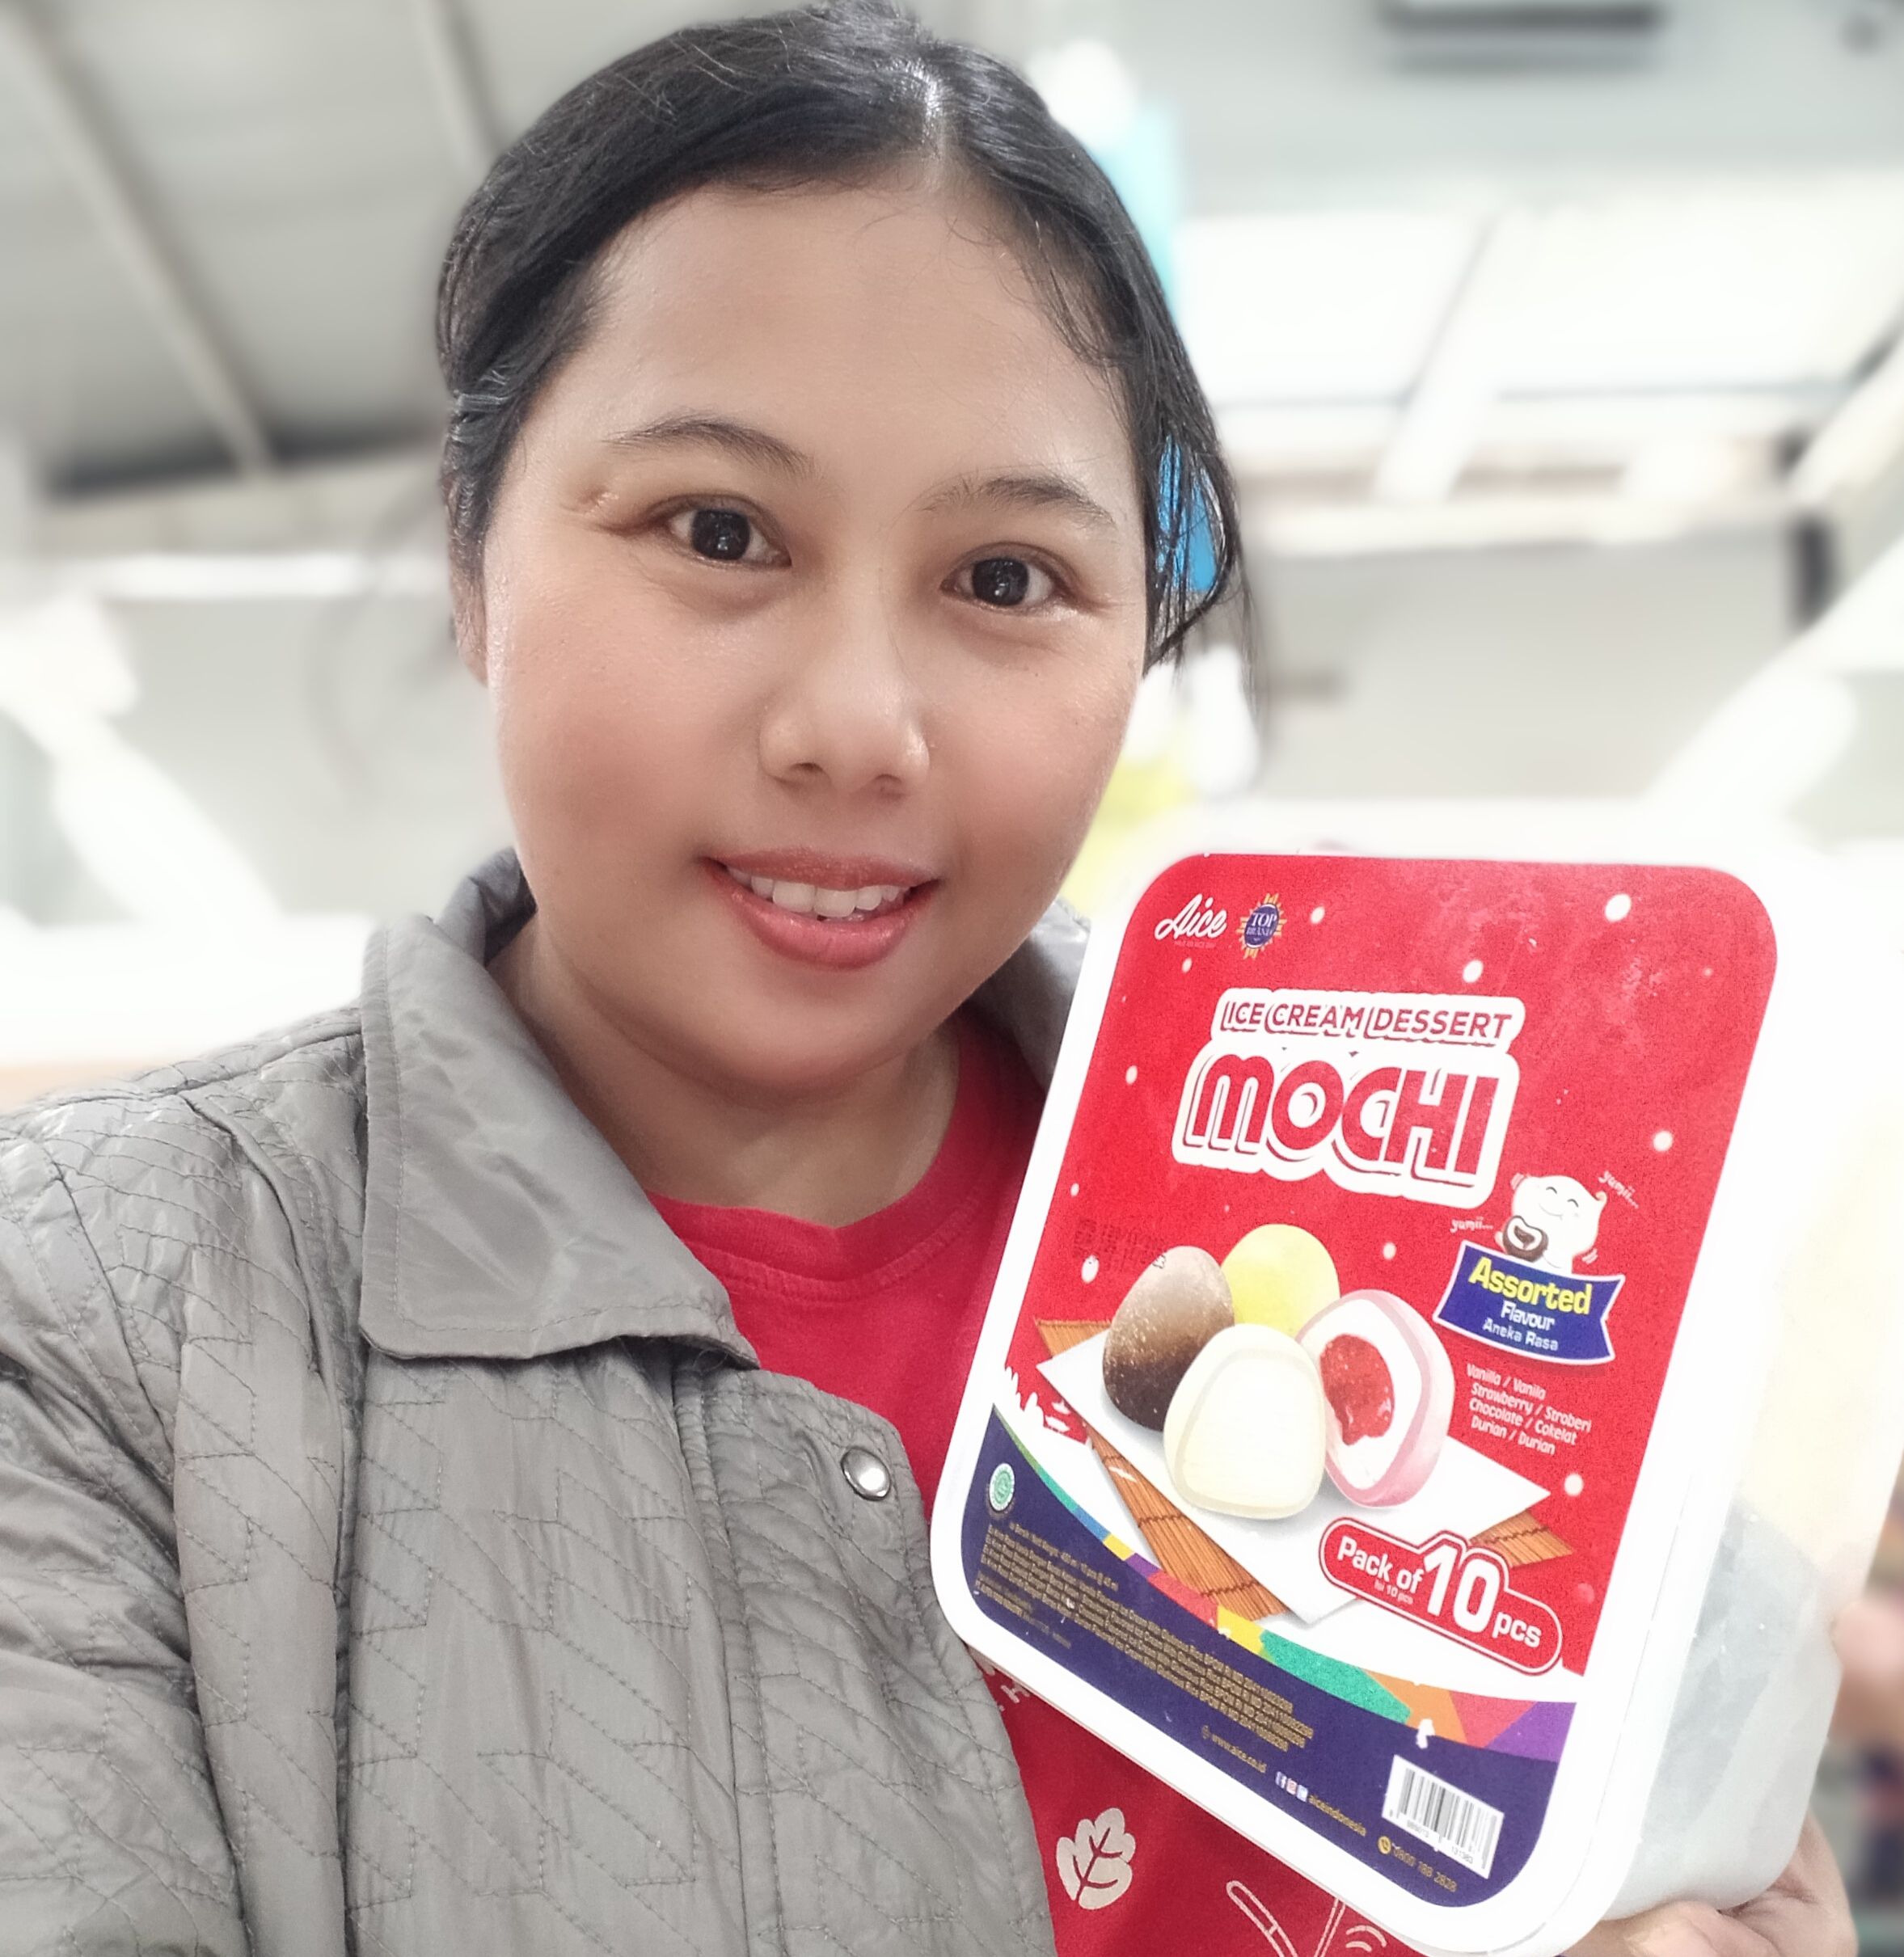 Dok Pro. Borong kemasan Eksklusif Mochi Aice Aneka rasa di modern Market